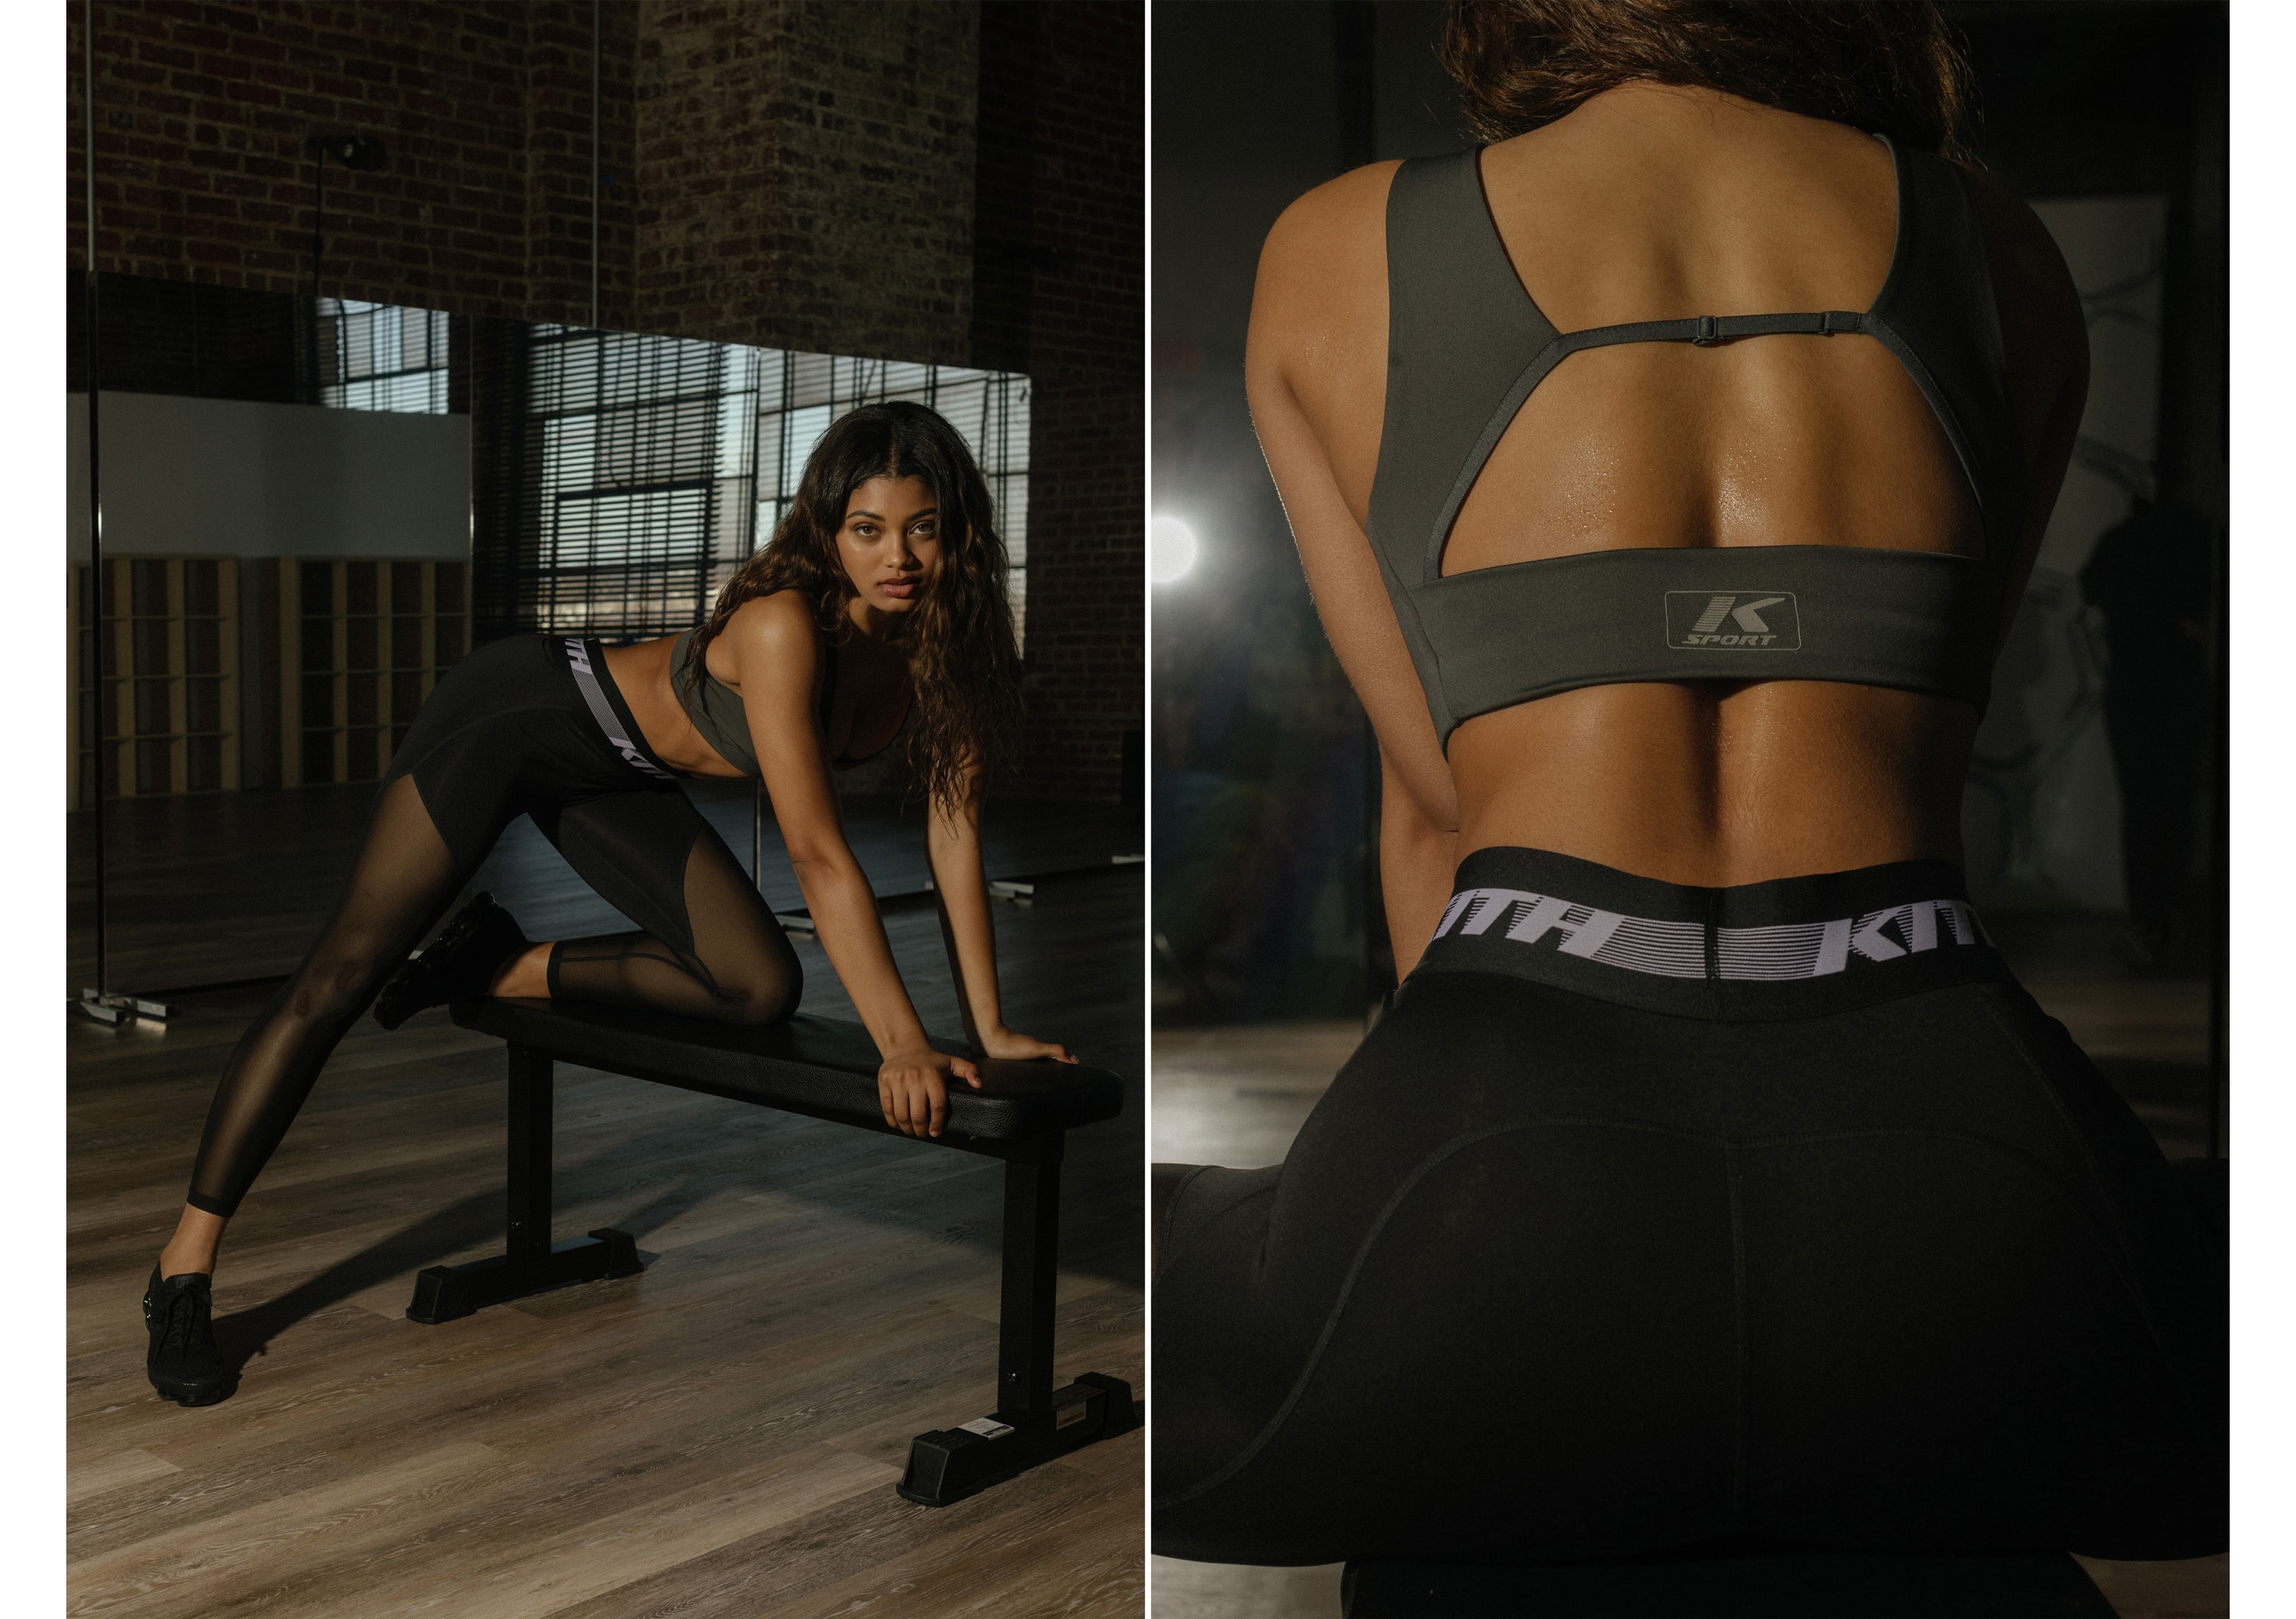 KITH Women Activewear Range Danielle Herrington Sports Illustrated Workout Clothes Fitness Fitspo